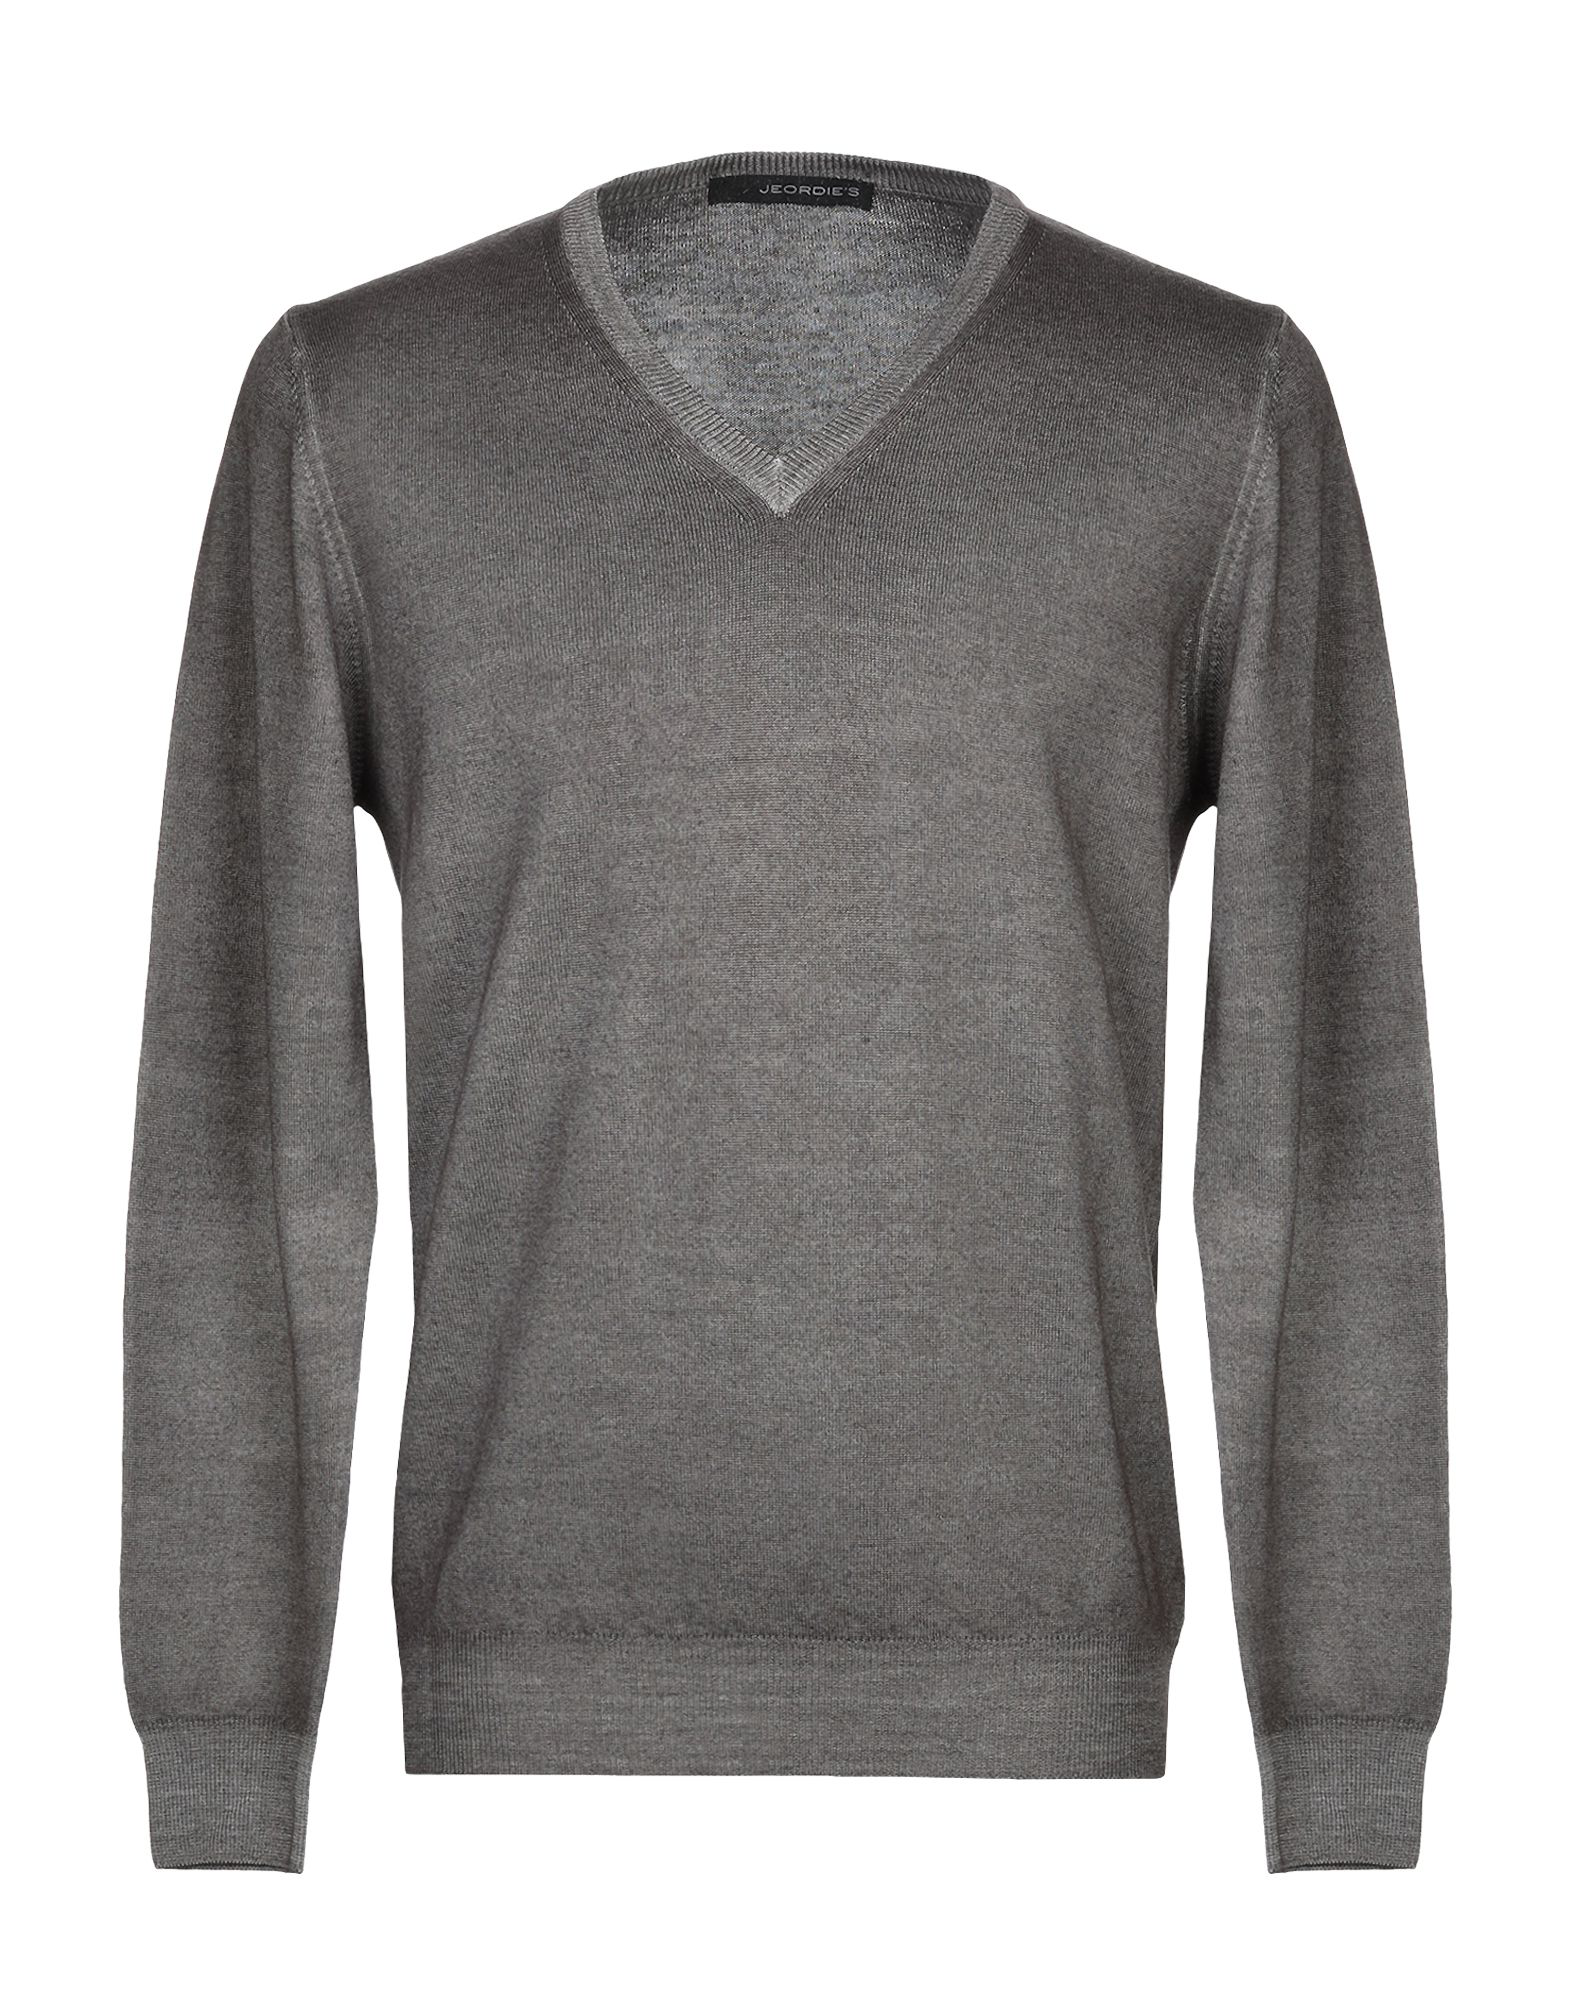 Jeordie's Sweater In Lead | ModeSens